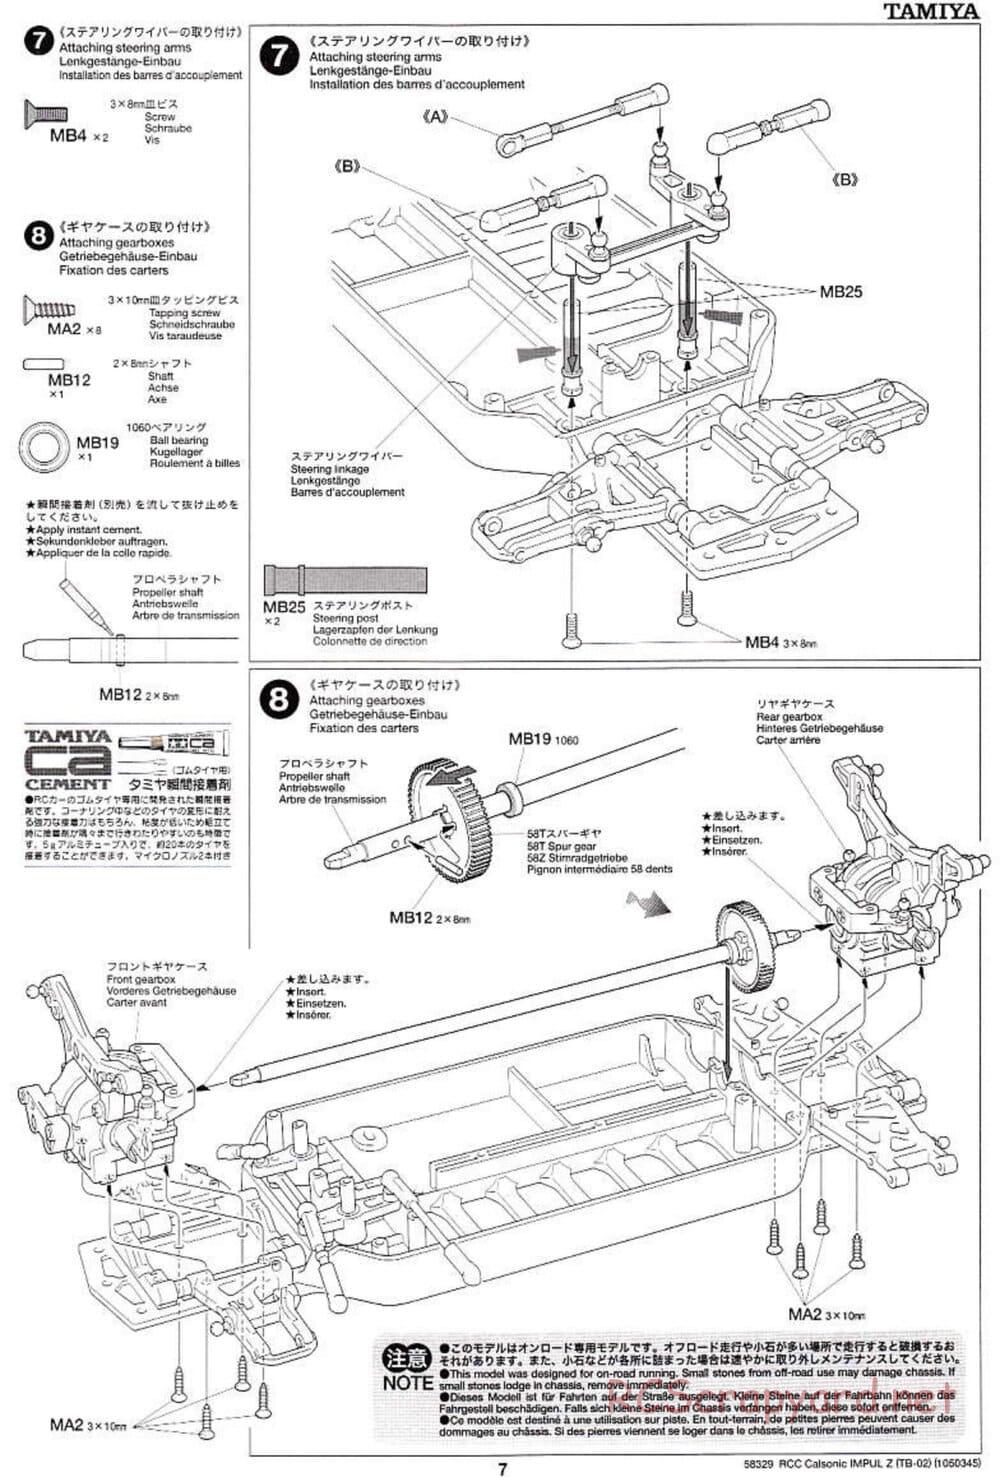 Tamiya - Calsonic Impul Z - TB-02 Chassis - Manual - Page 7